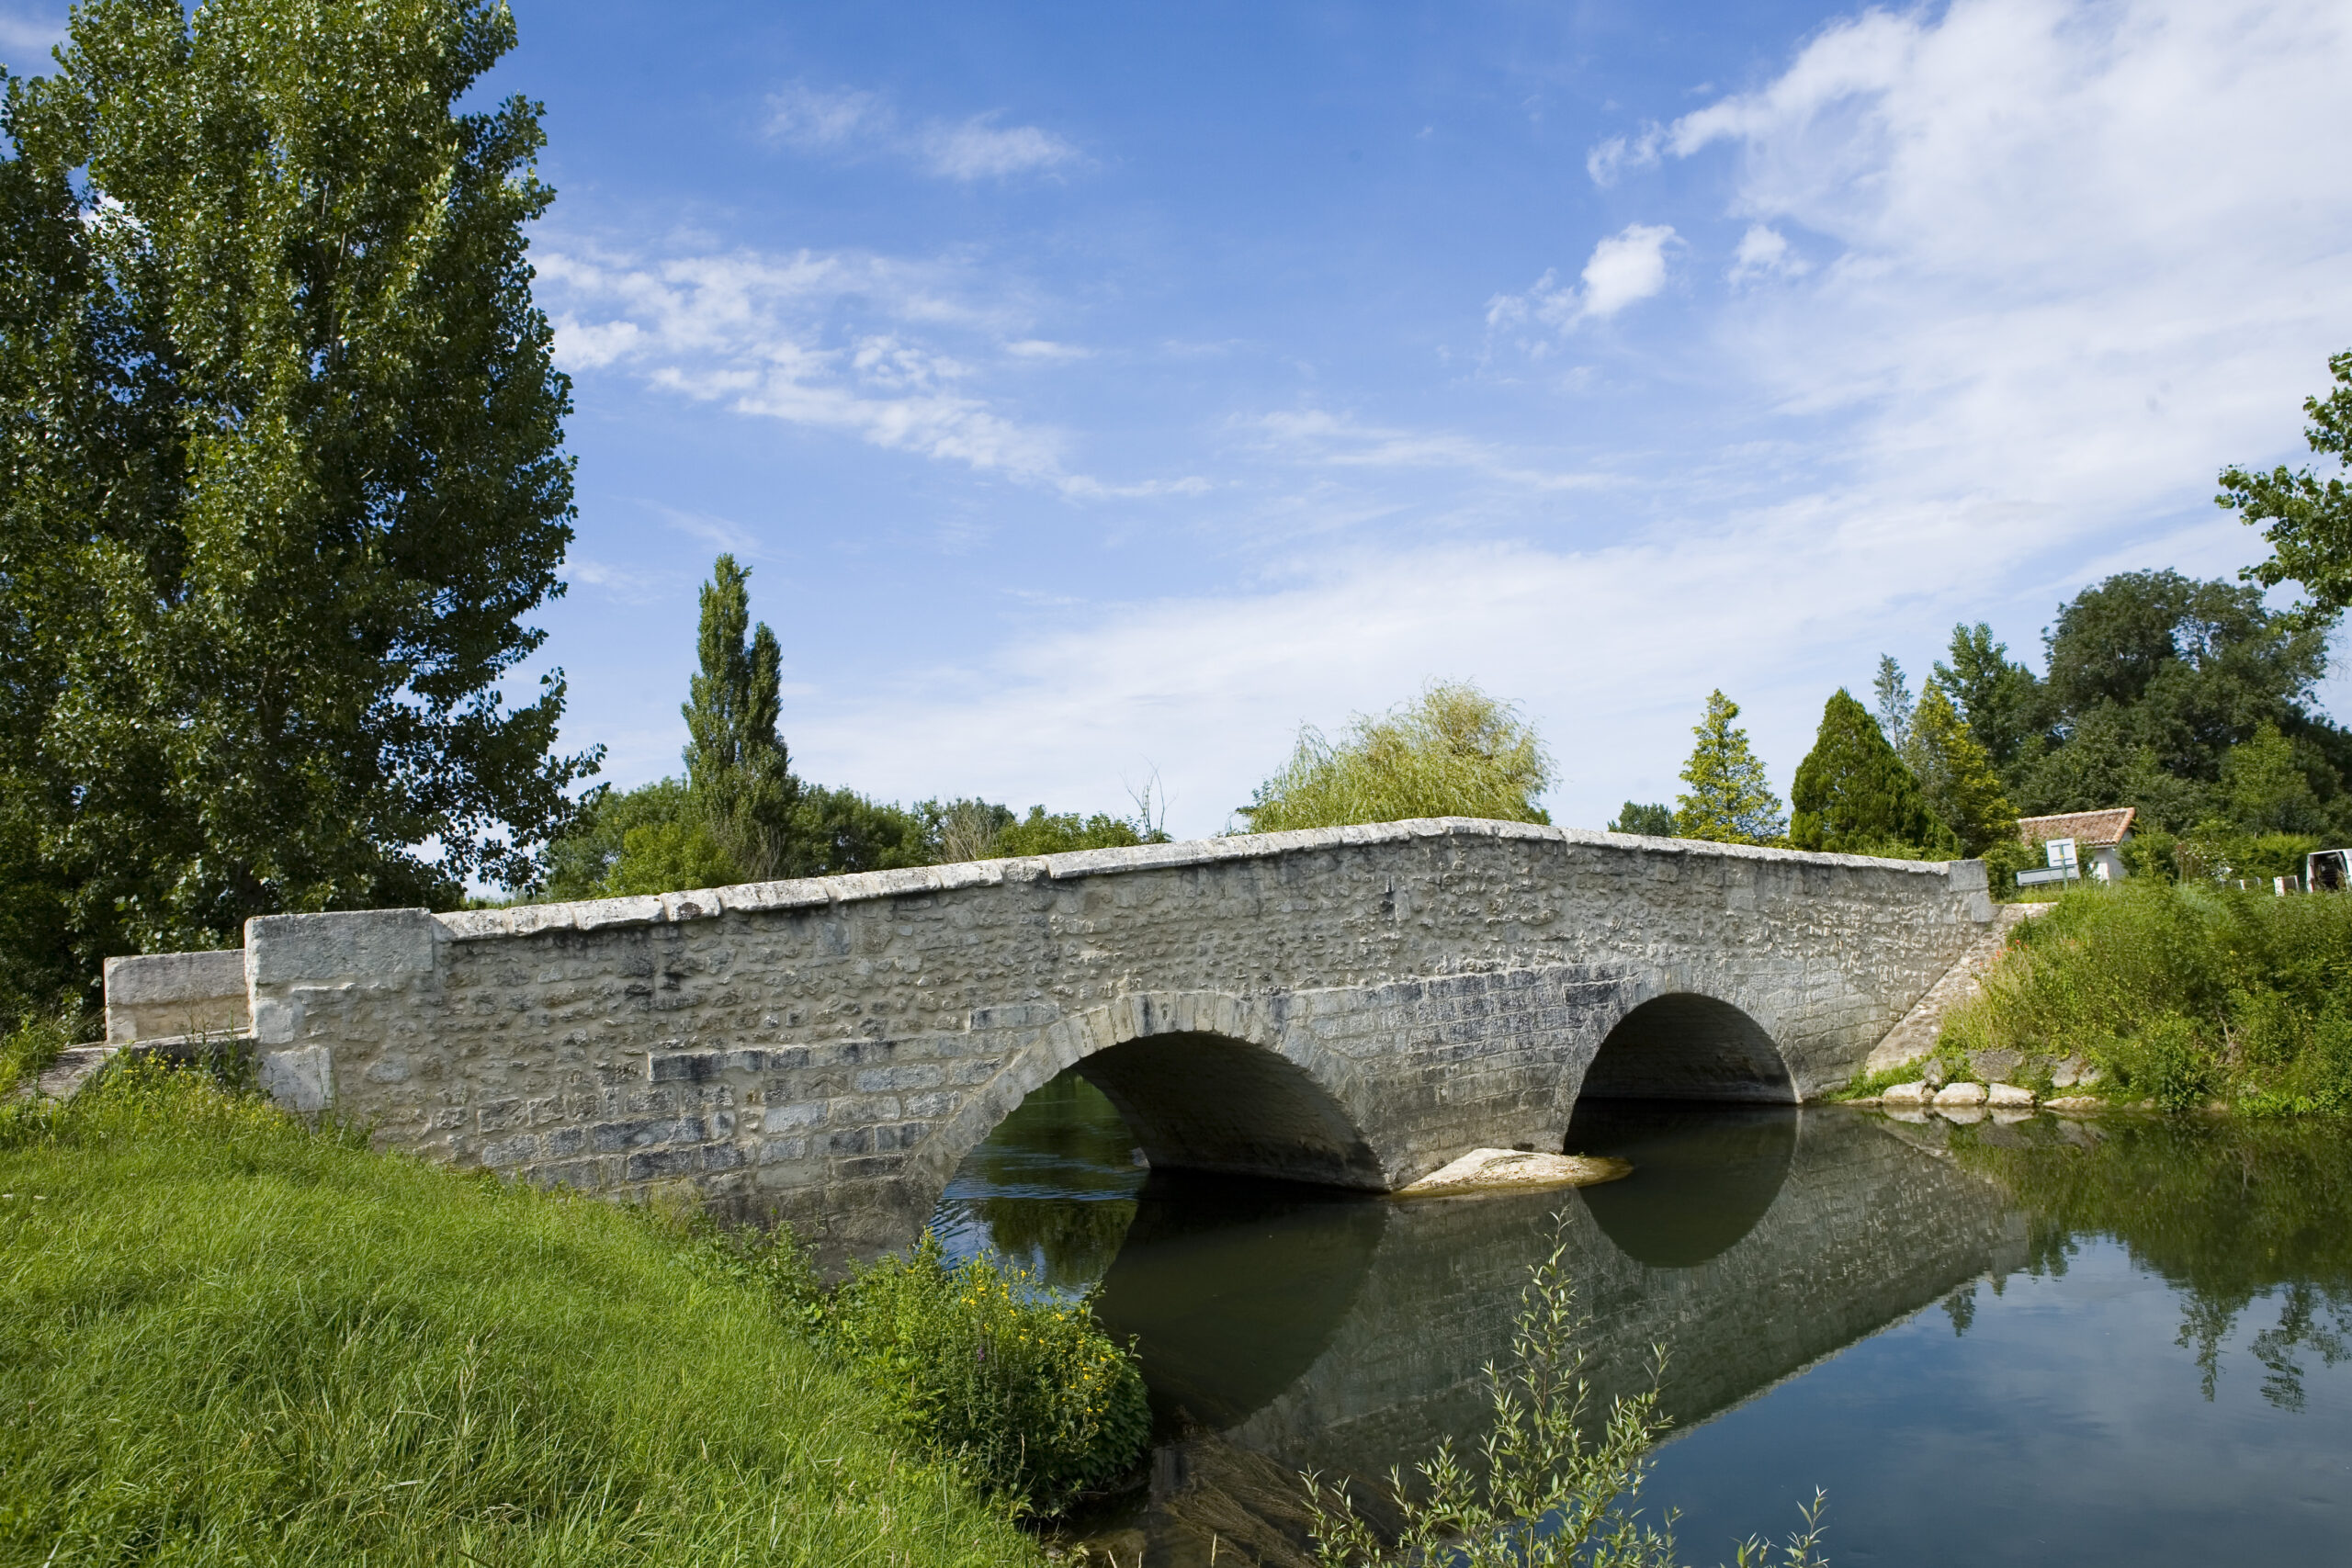 Old stone bridge over river Charente in France